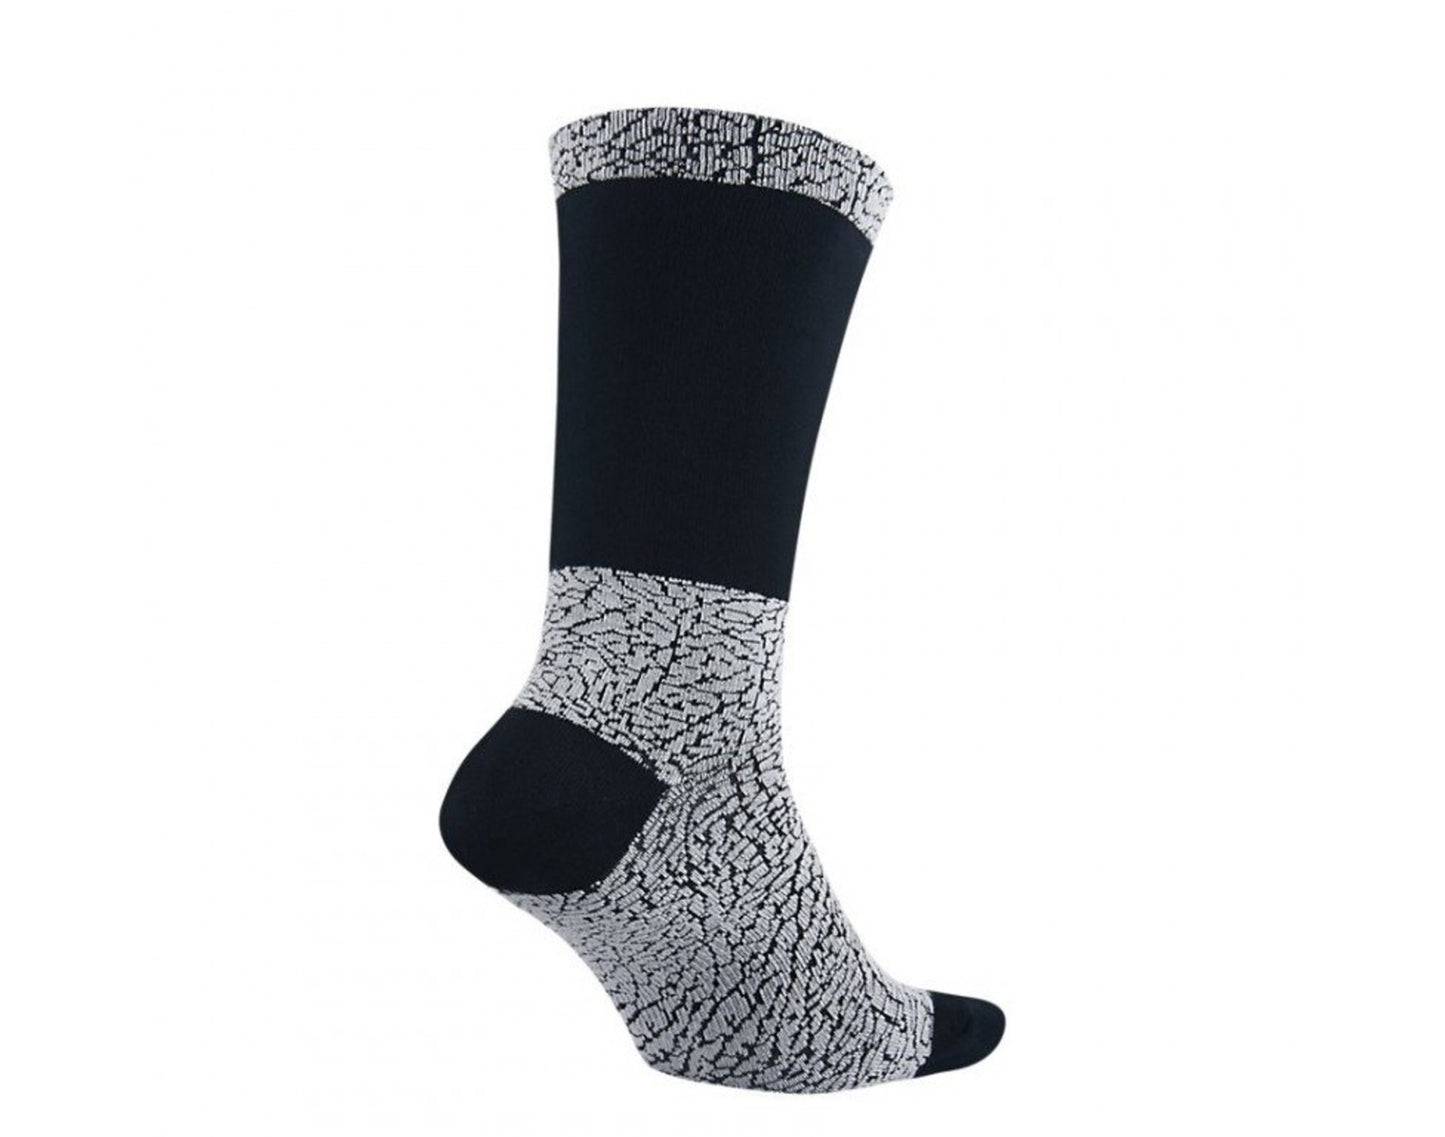 Nike Air Jordan Elephant Print Crew Black/Wolf Grey Socks SX5244-012